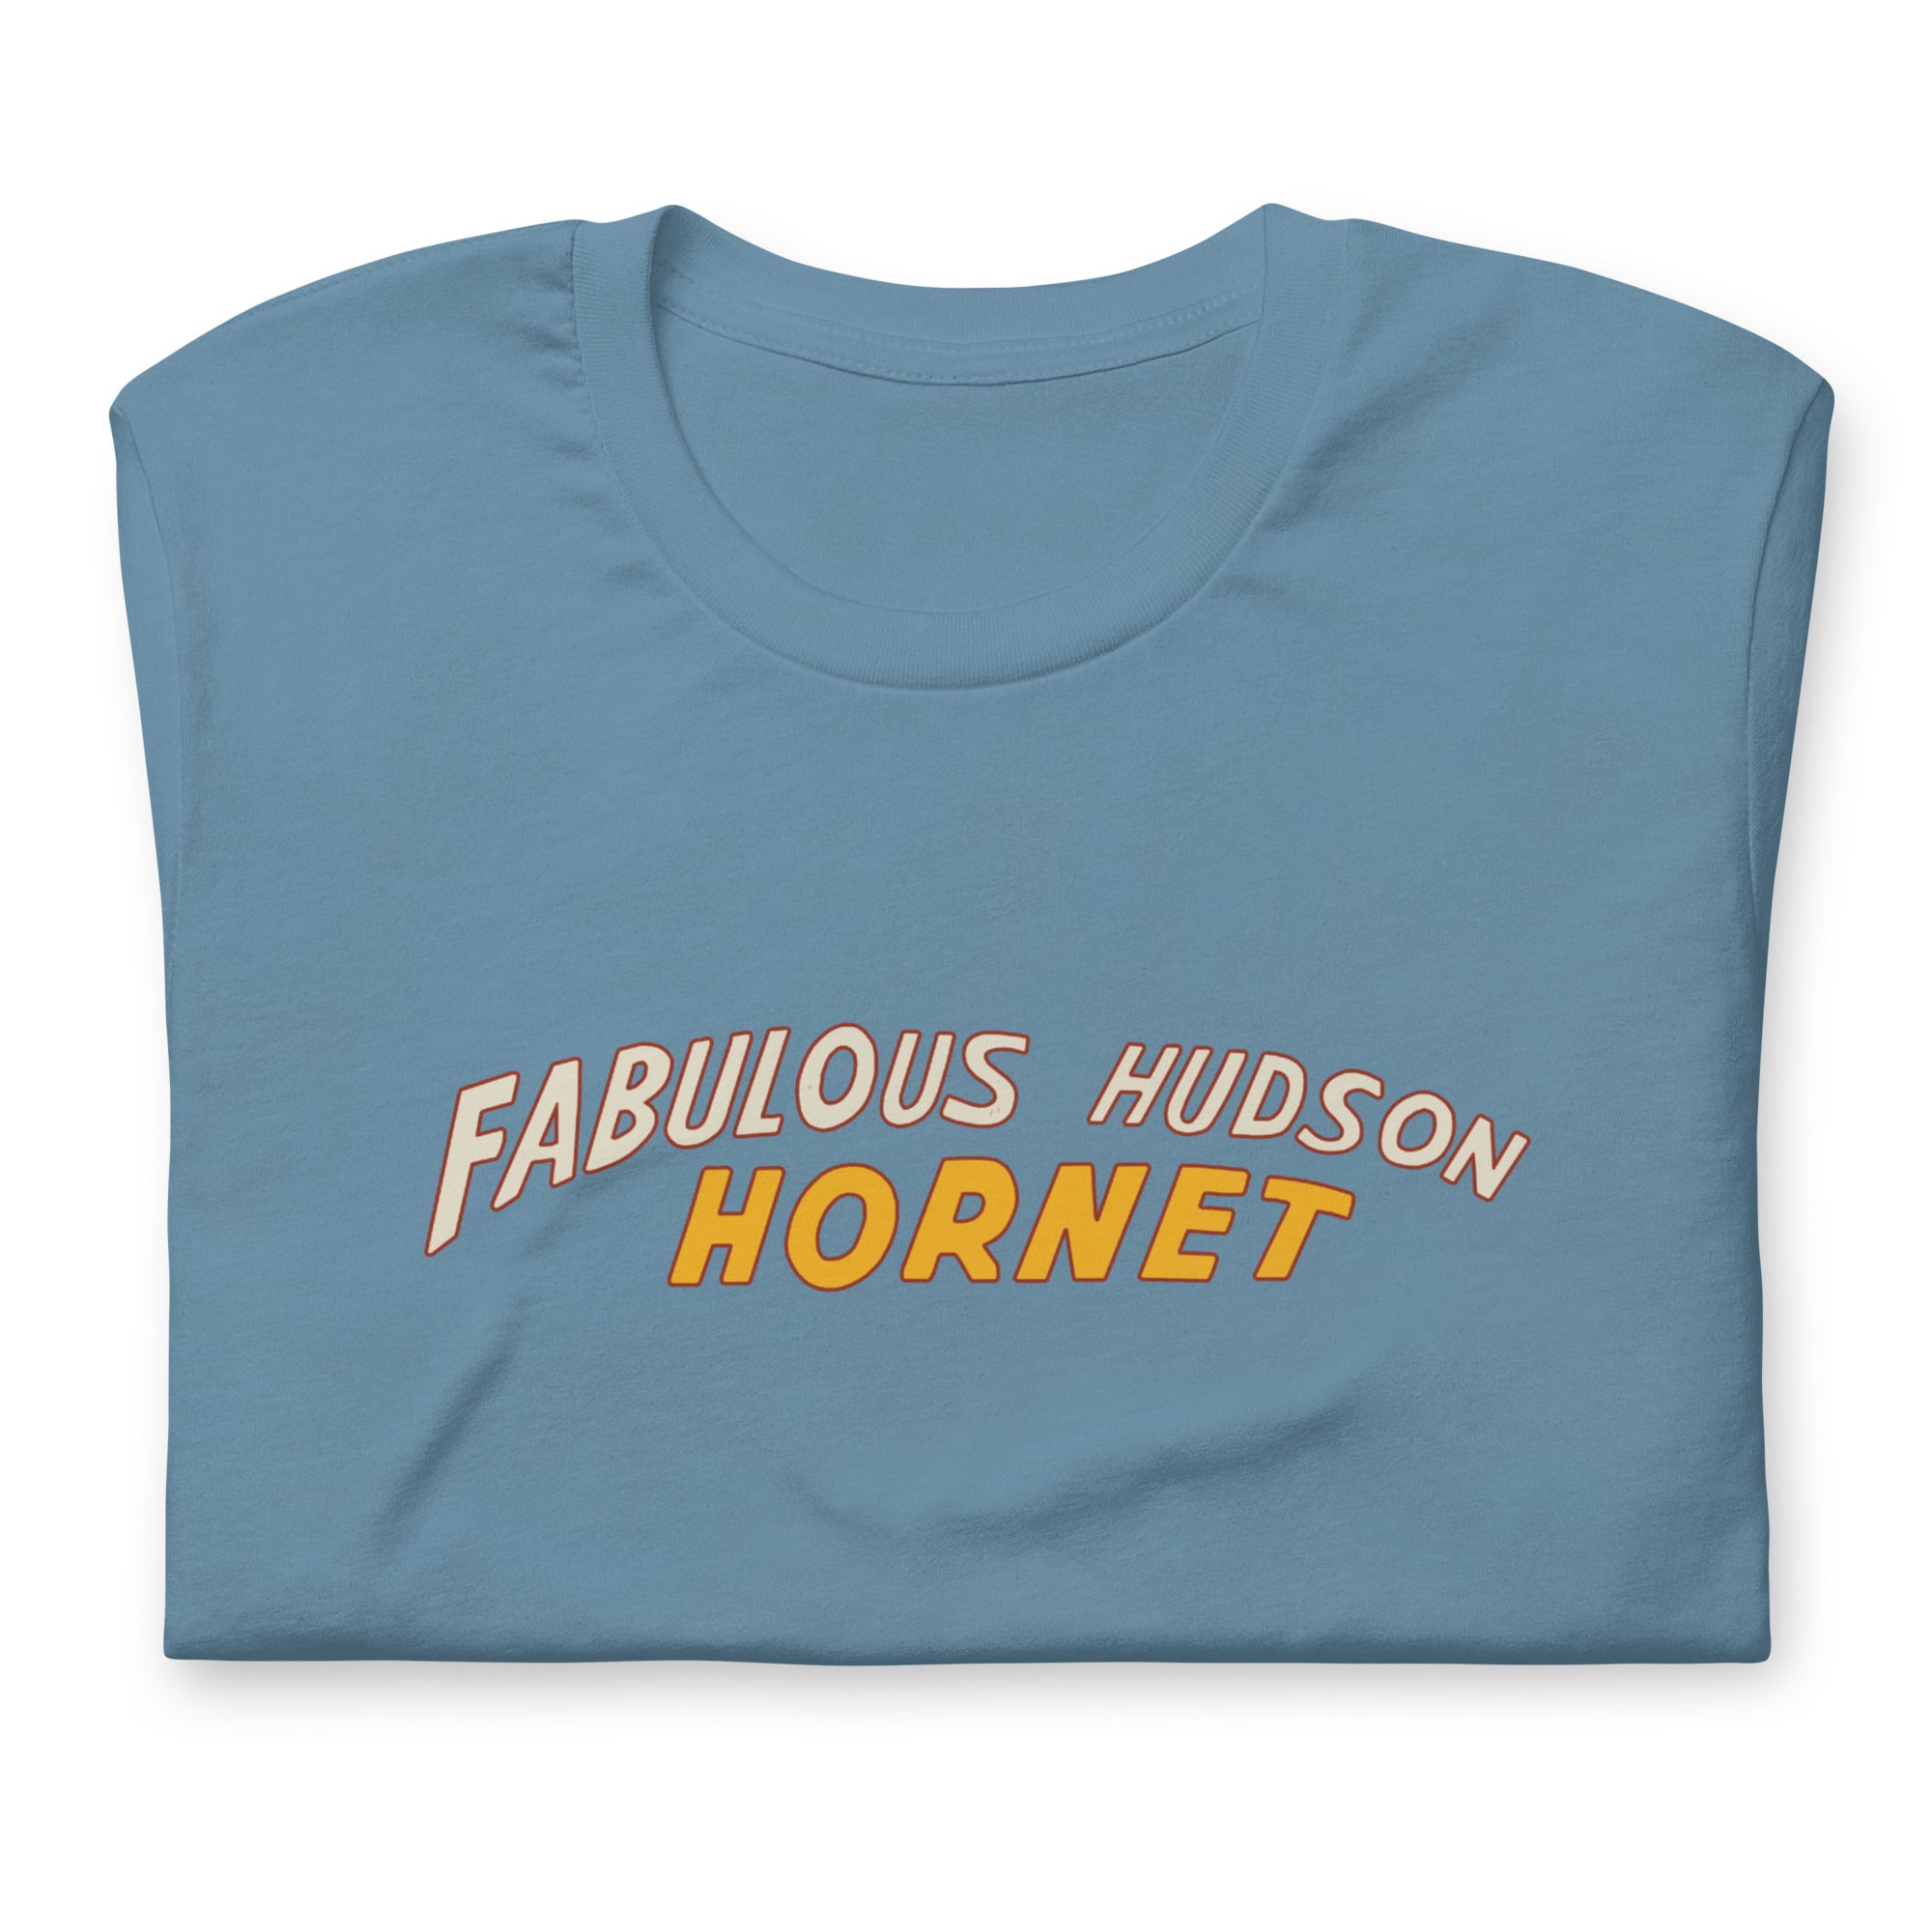 Herb Thomas Nascar fabulous hudson hornet t shirt grey blue rear flat